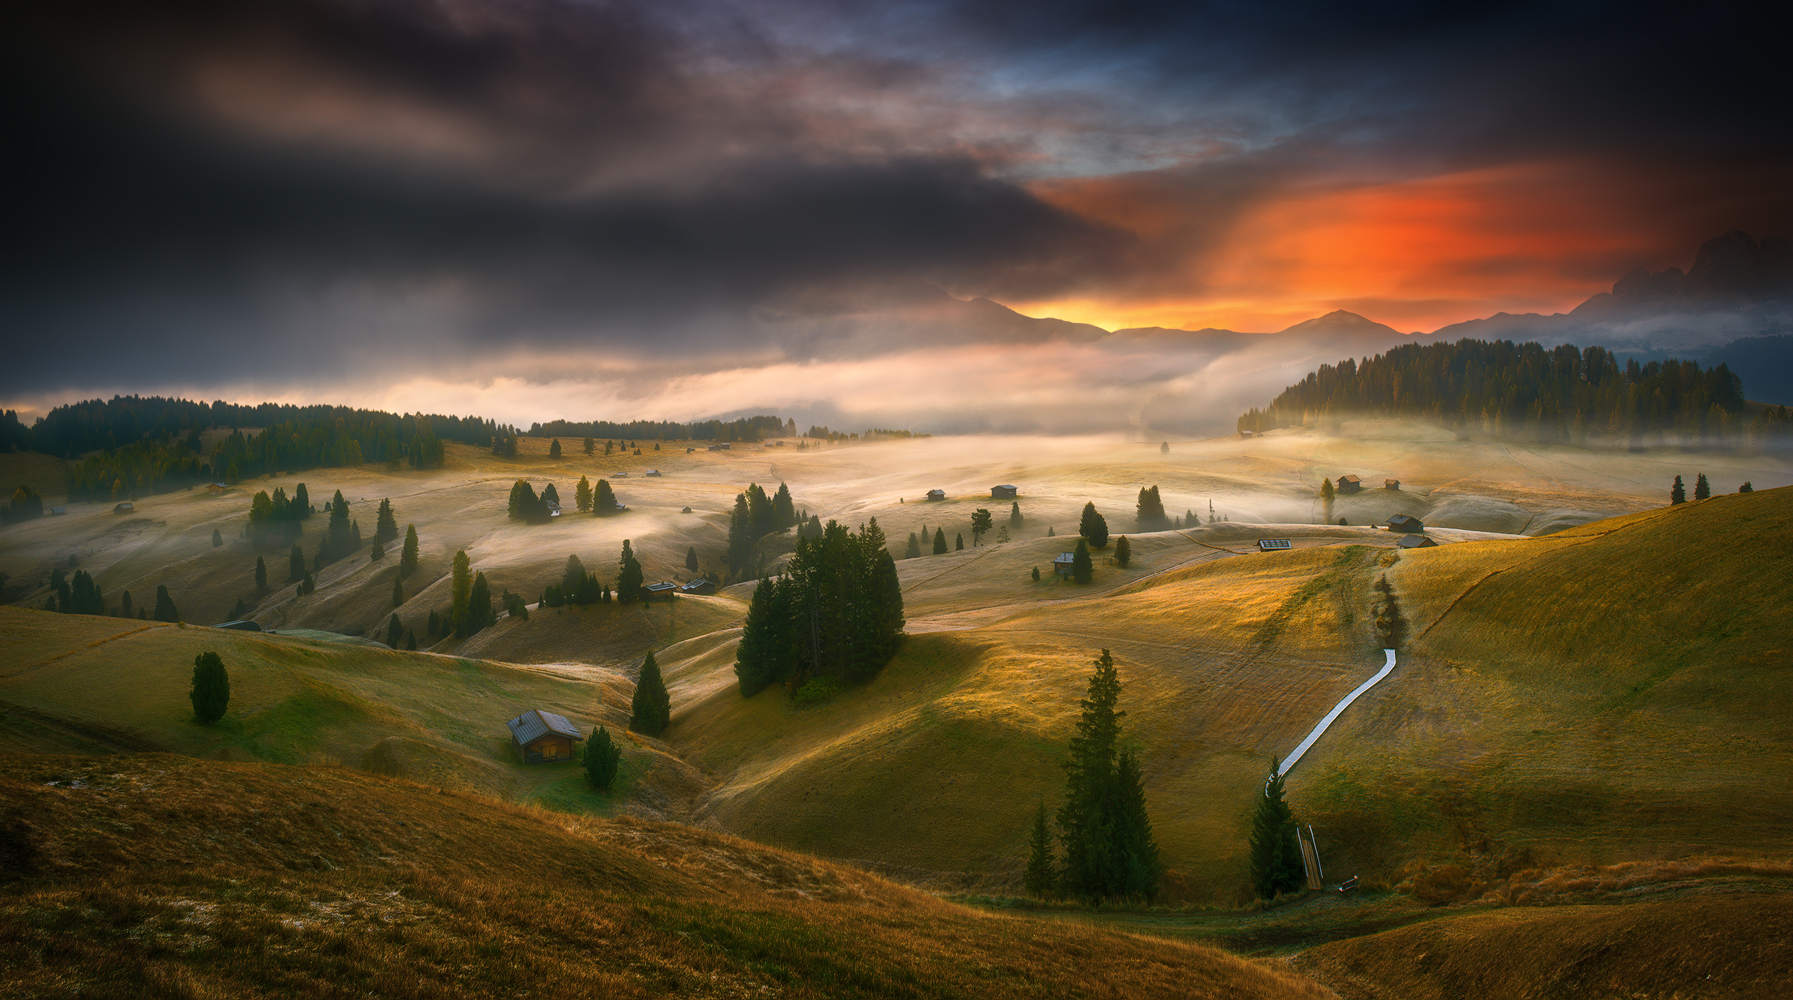 General 1793x1000 Krzysztof Browko landscape Alps mist sunset red sky trees hills hut